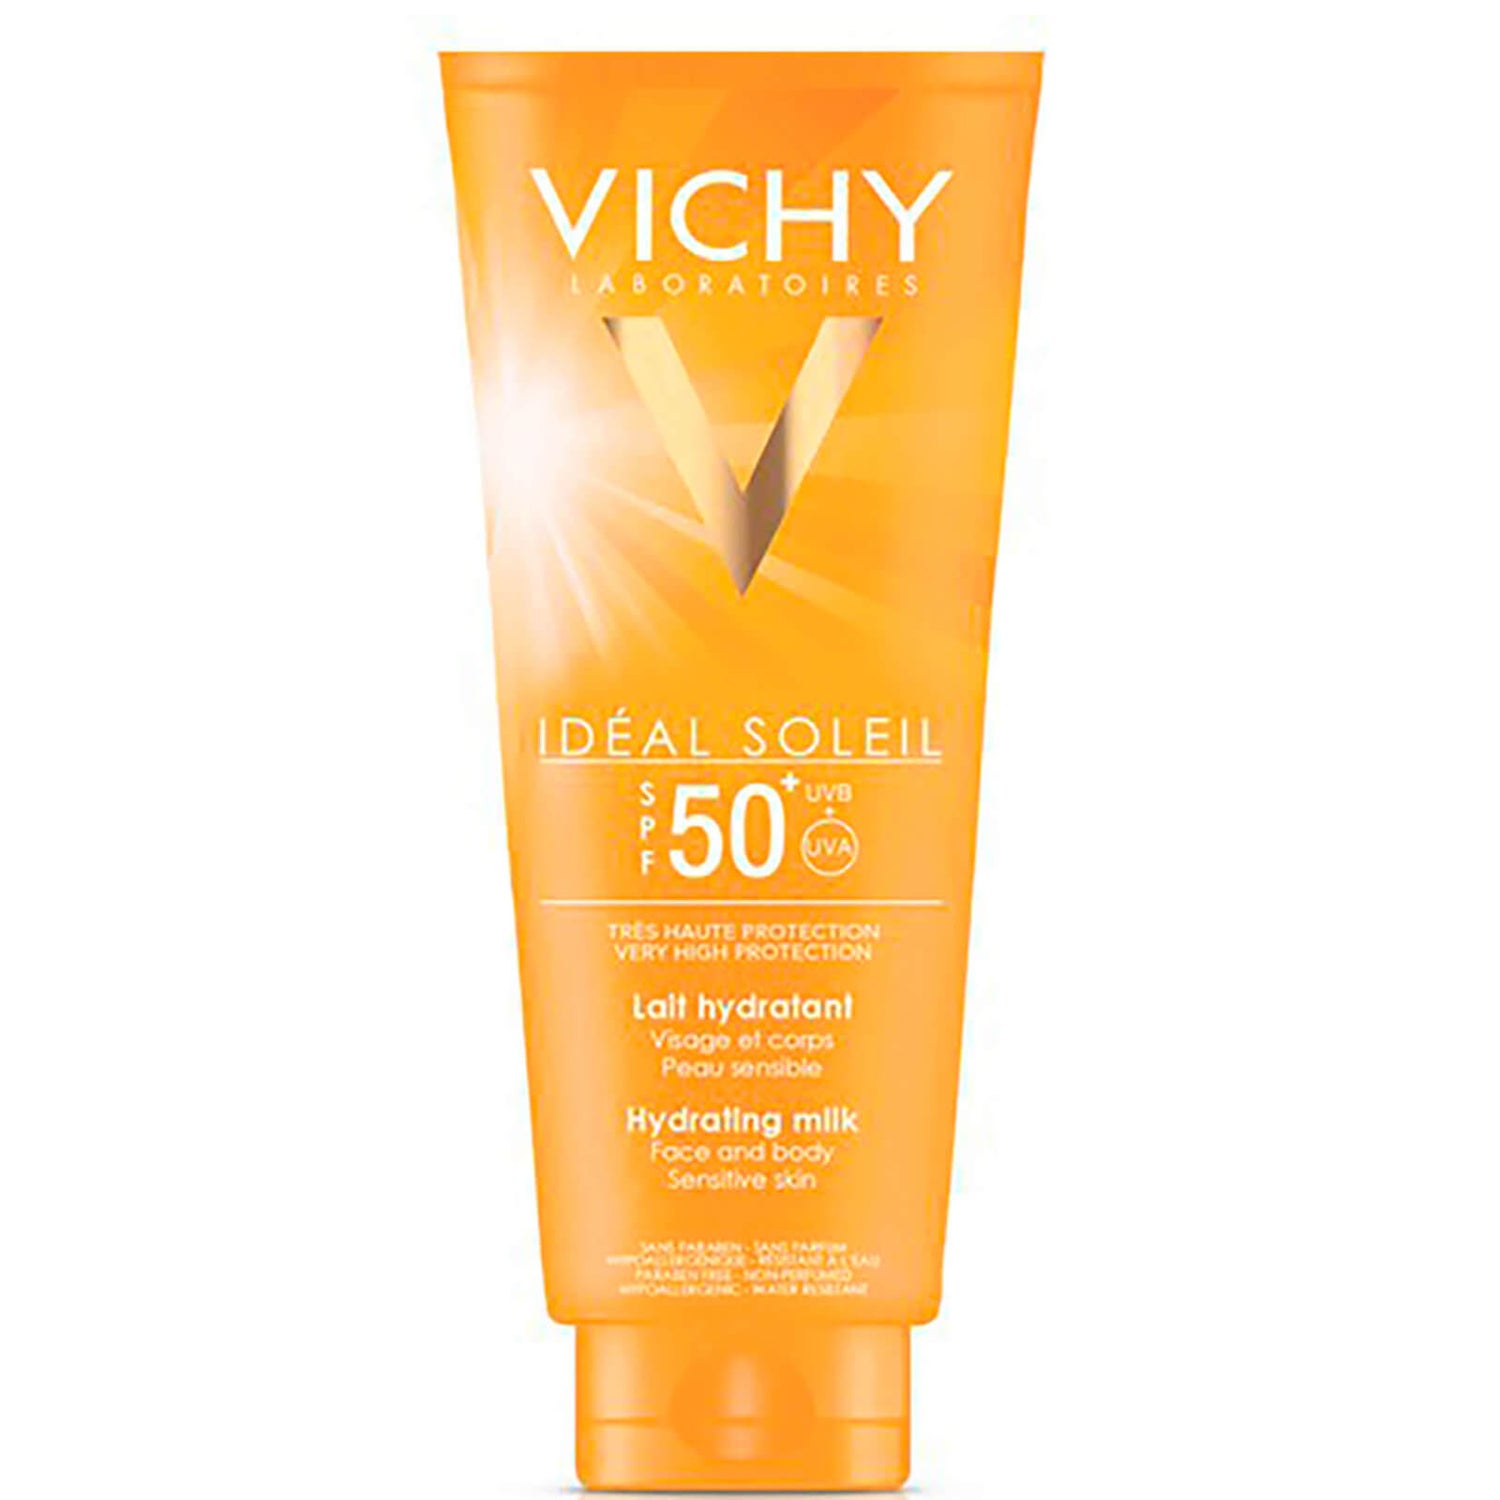 Vichy Id?al Soleil Sun-Milk for Face & Body SPF 50+ 300 ml